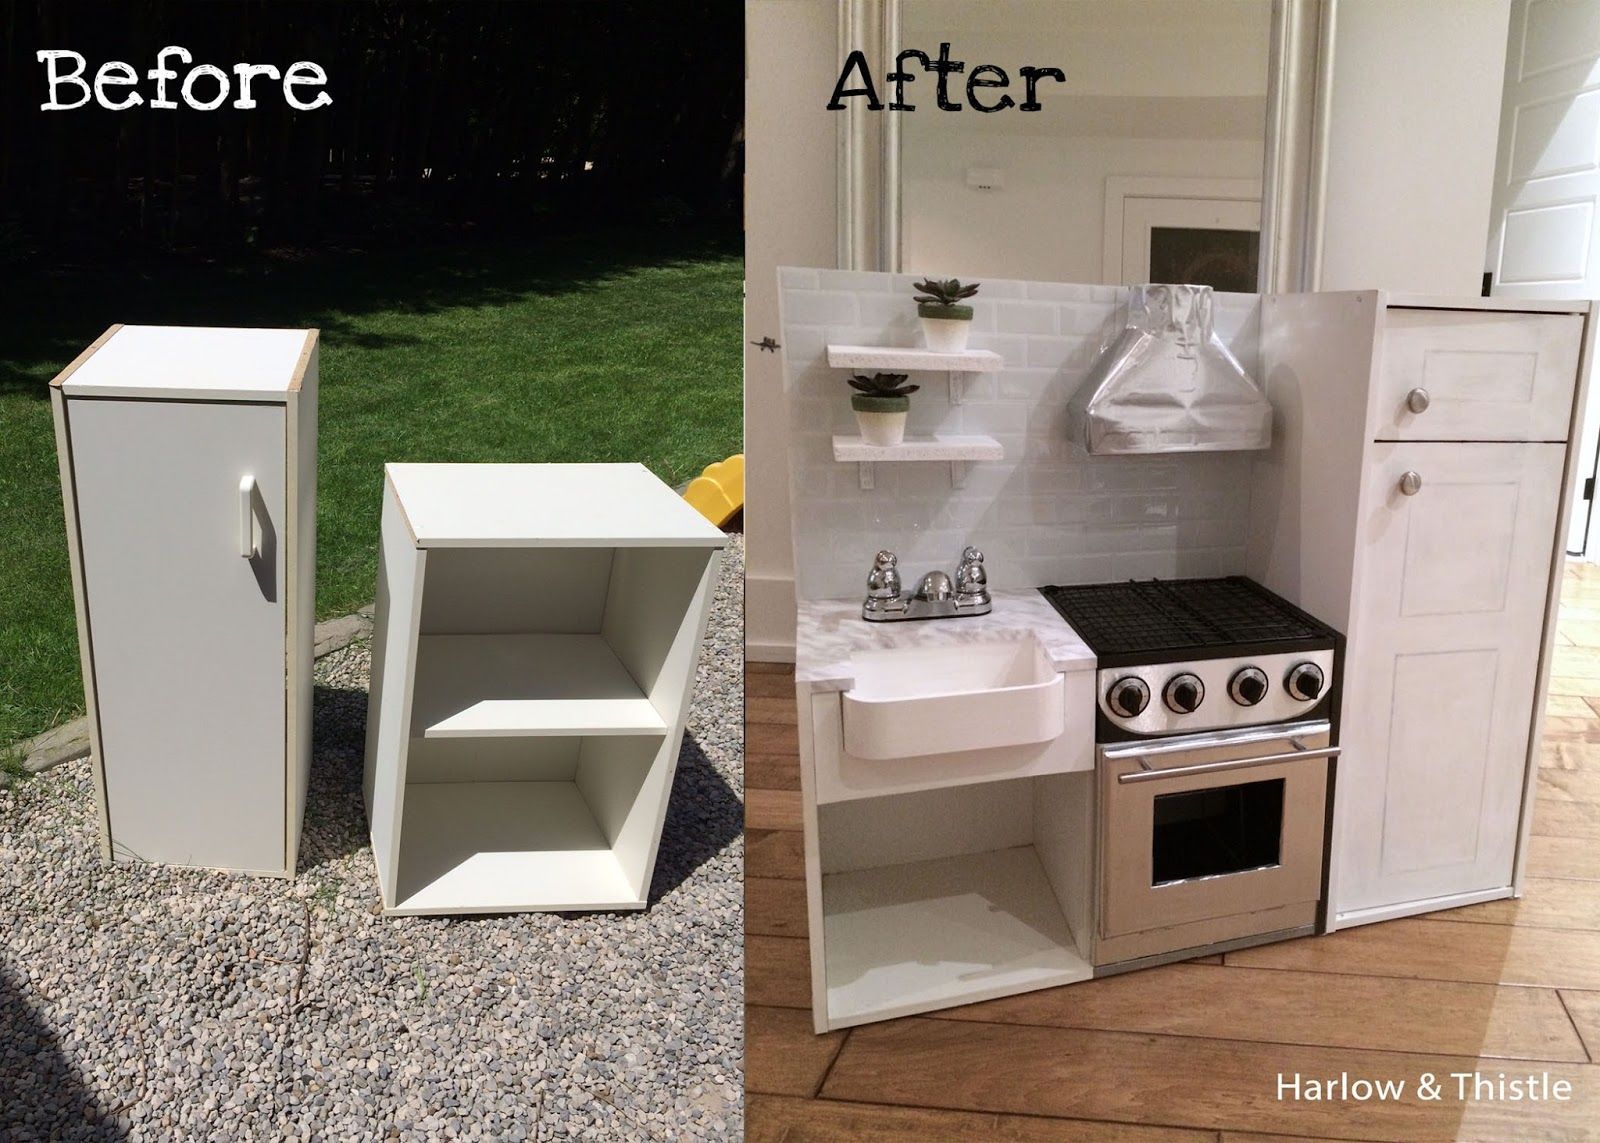 Harlow & Thistle - Home Design - Lifestyle - DIY: DIY Play Kitchen - Harlow & Thistle - Home Design - Lifestyle - DIY: DIY Play Kitchen -   21 diy Kids kitchen ideas